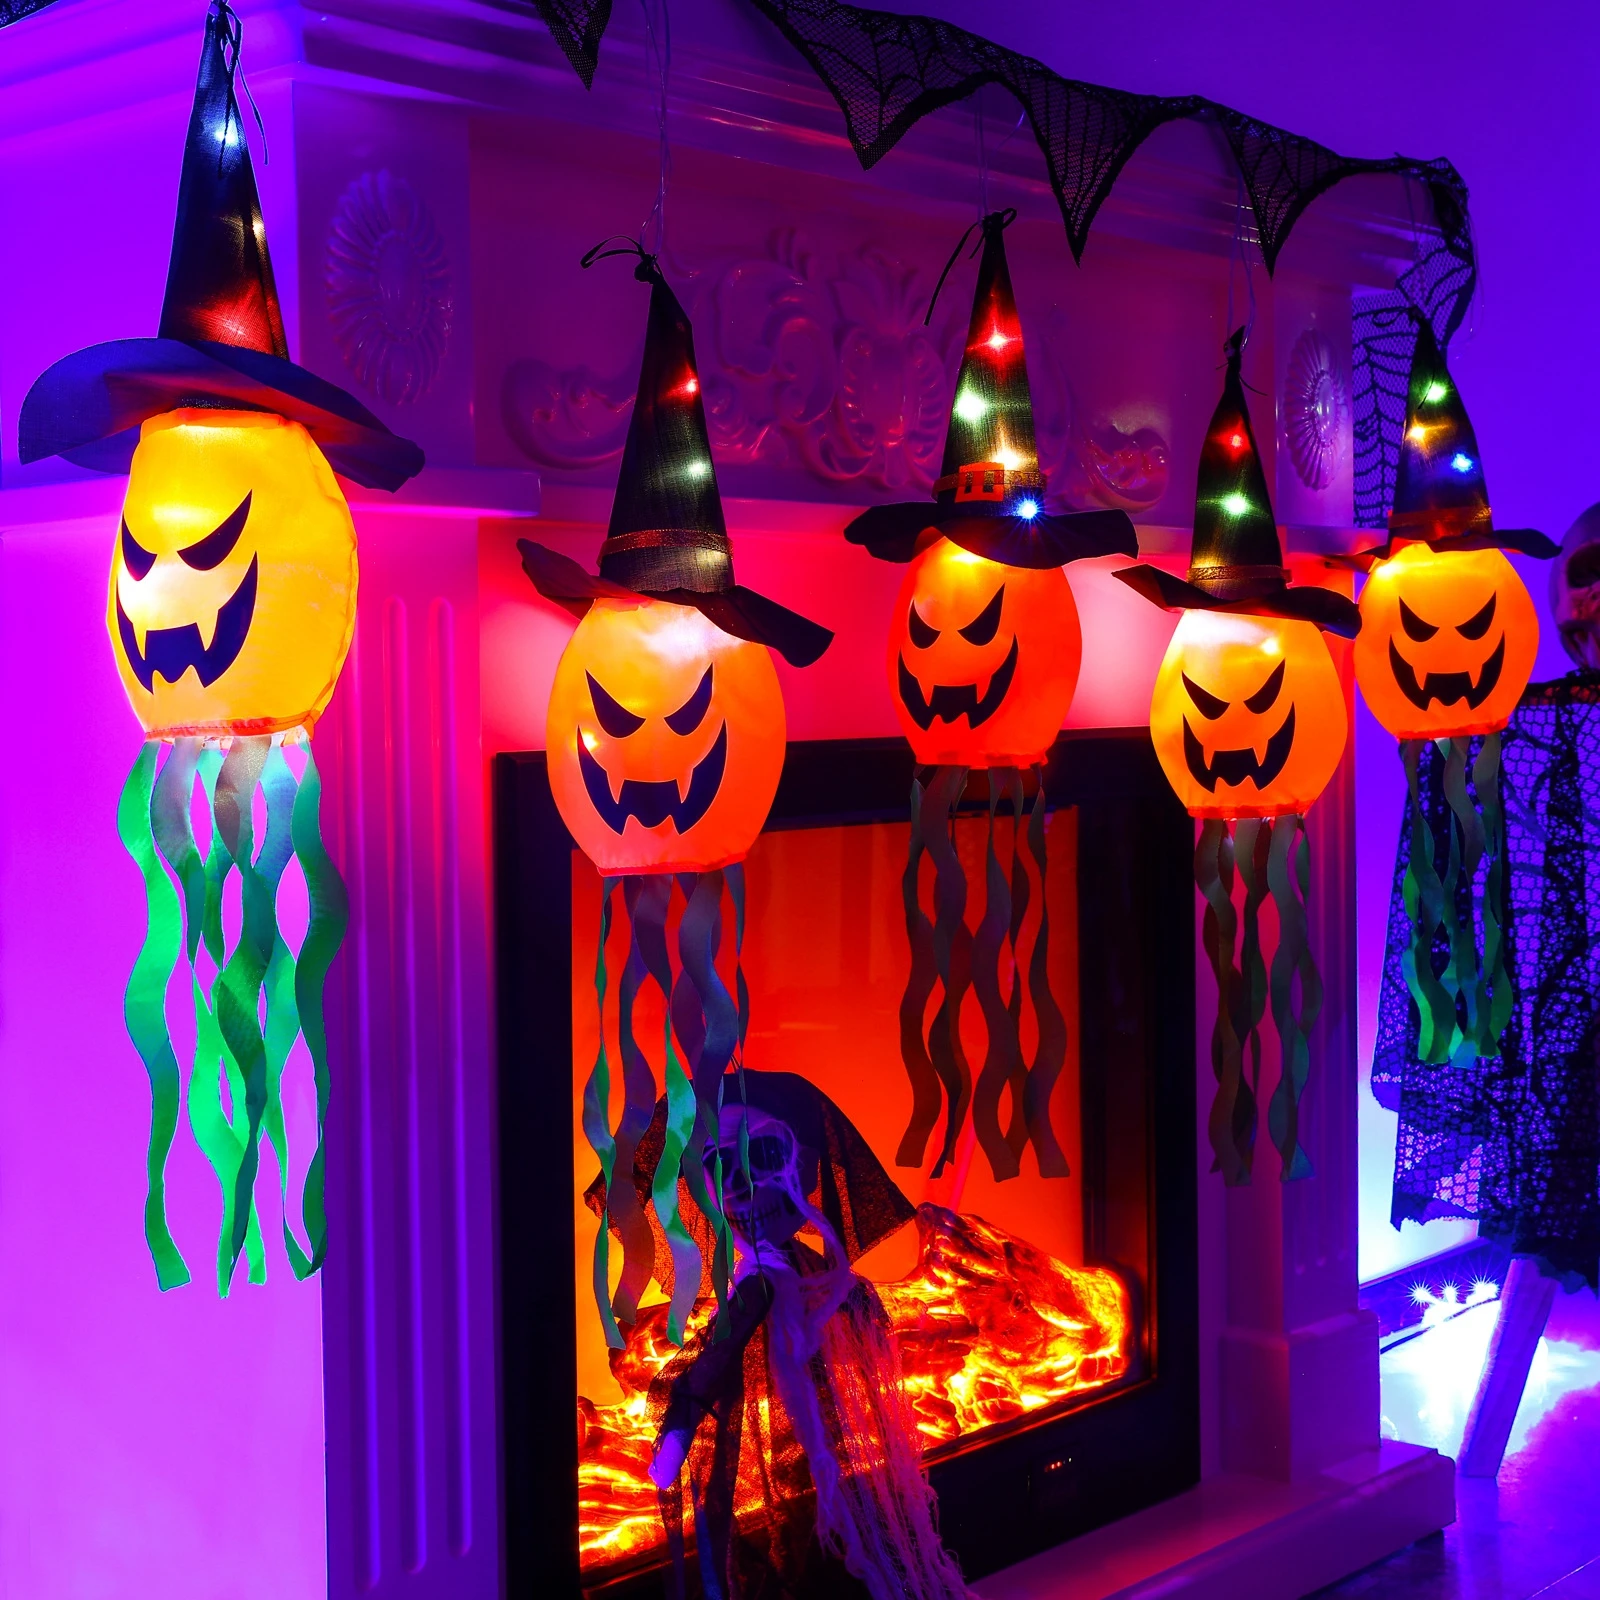 

Halloween Hanging Lighted Glowing Ghost Witch Hat LED String Lights Garden Indoor Outdoor Decor Halloween Decorations Pumpkin